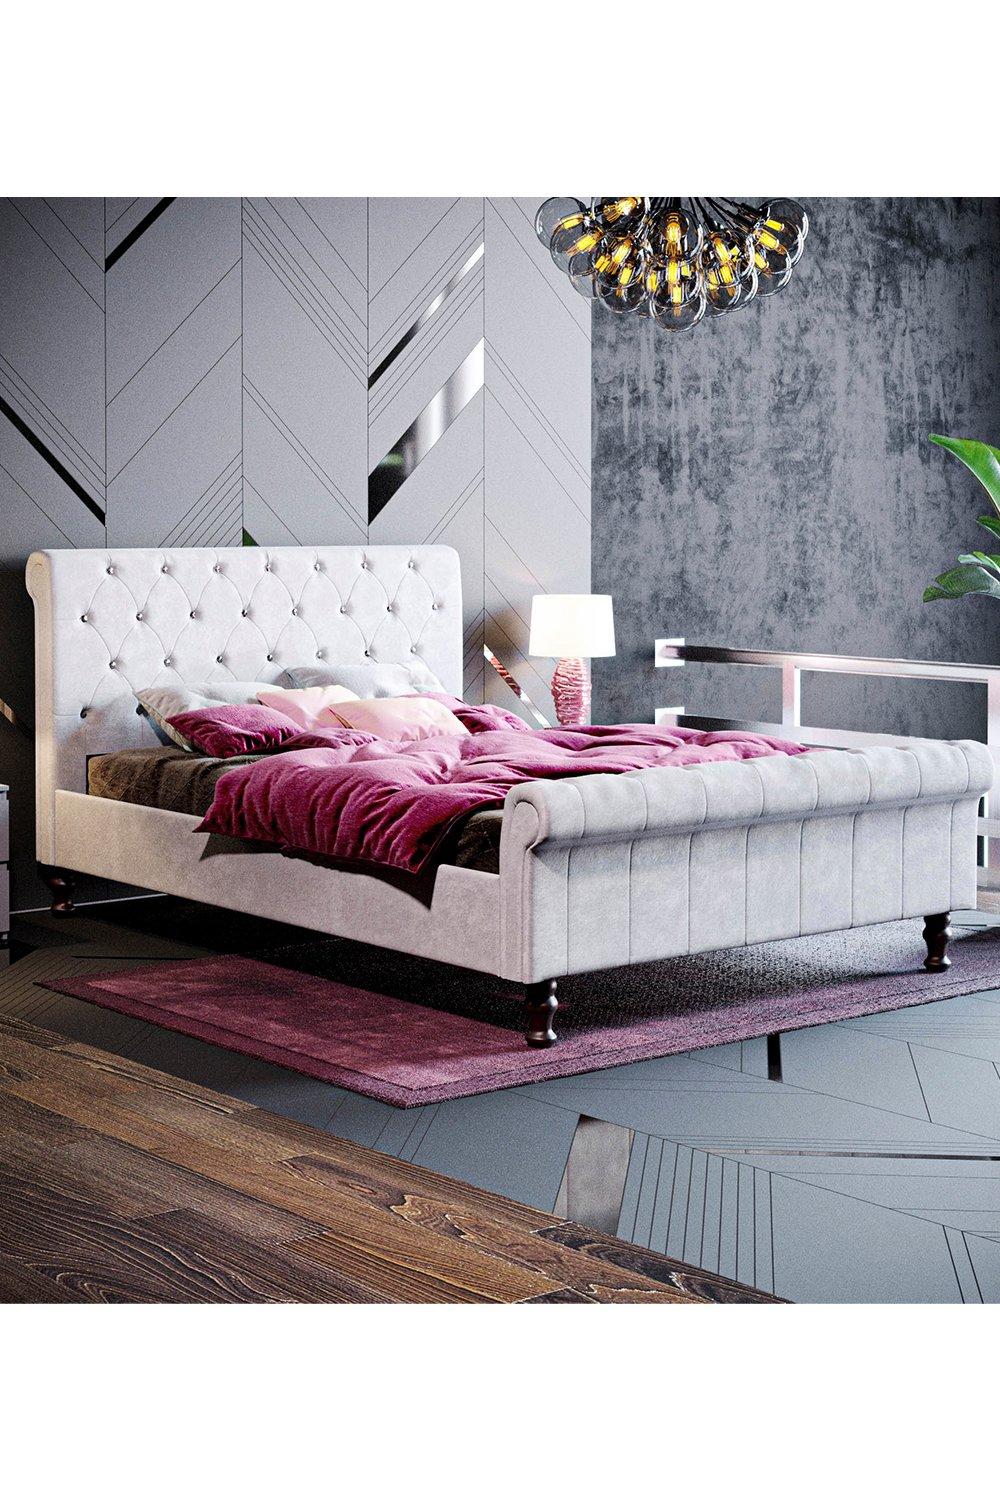 Vida Designs Violetta Double Bed Velvet Fabric 1150 x 1470 x 2220 mm